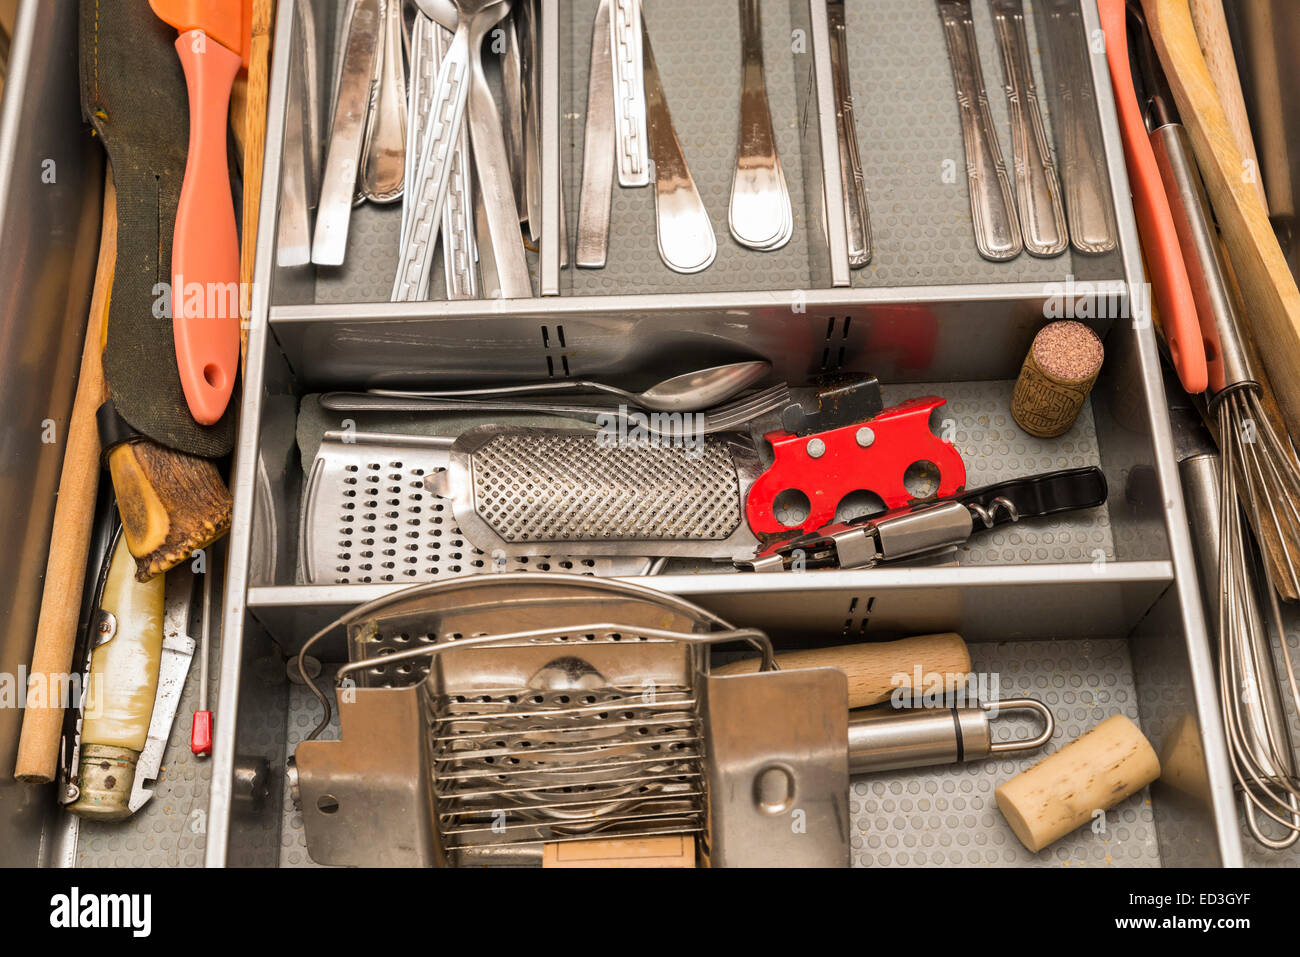 utensils in the kitchen drawer Stock Photo